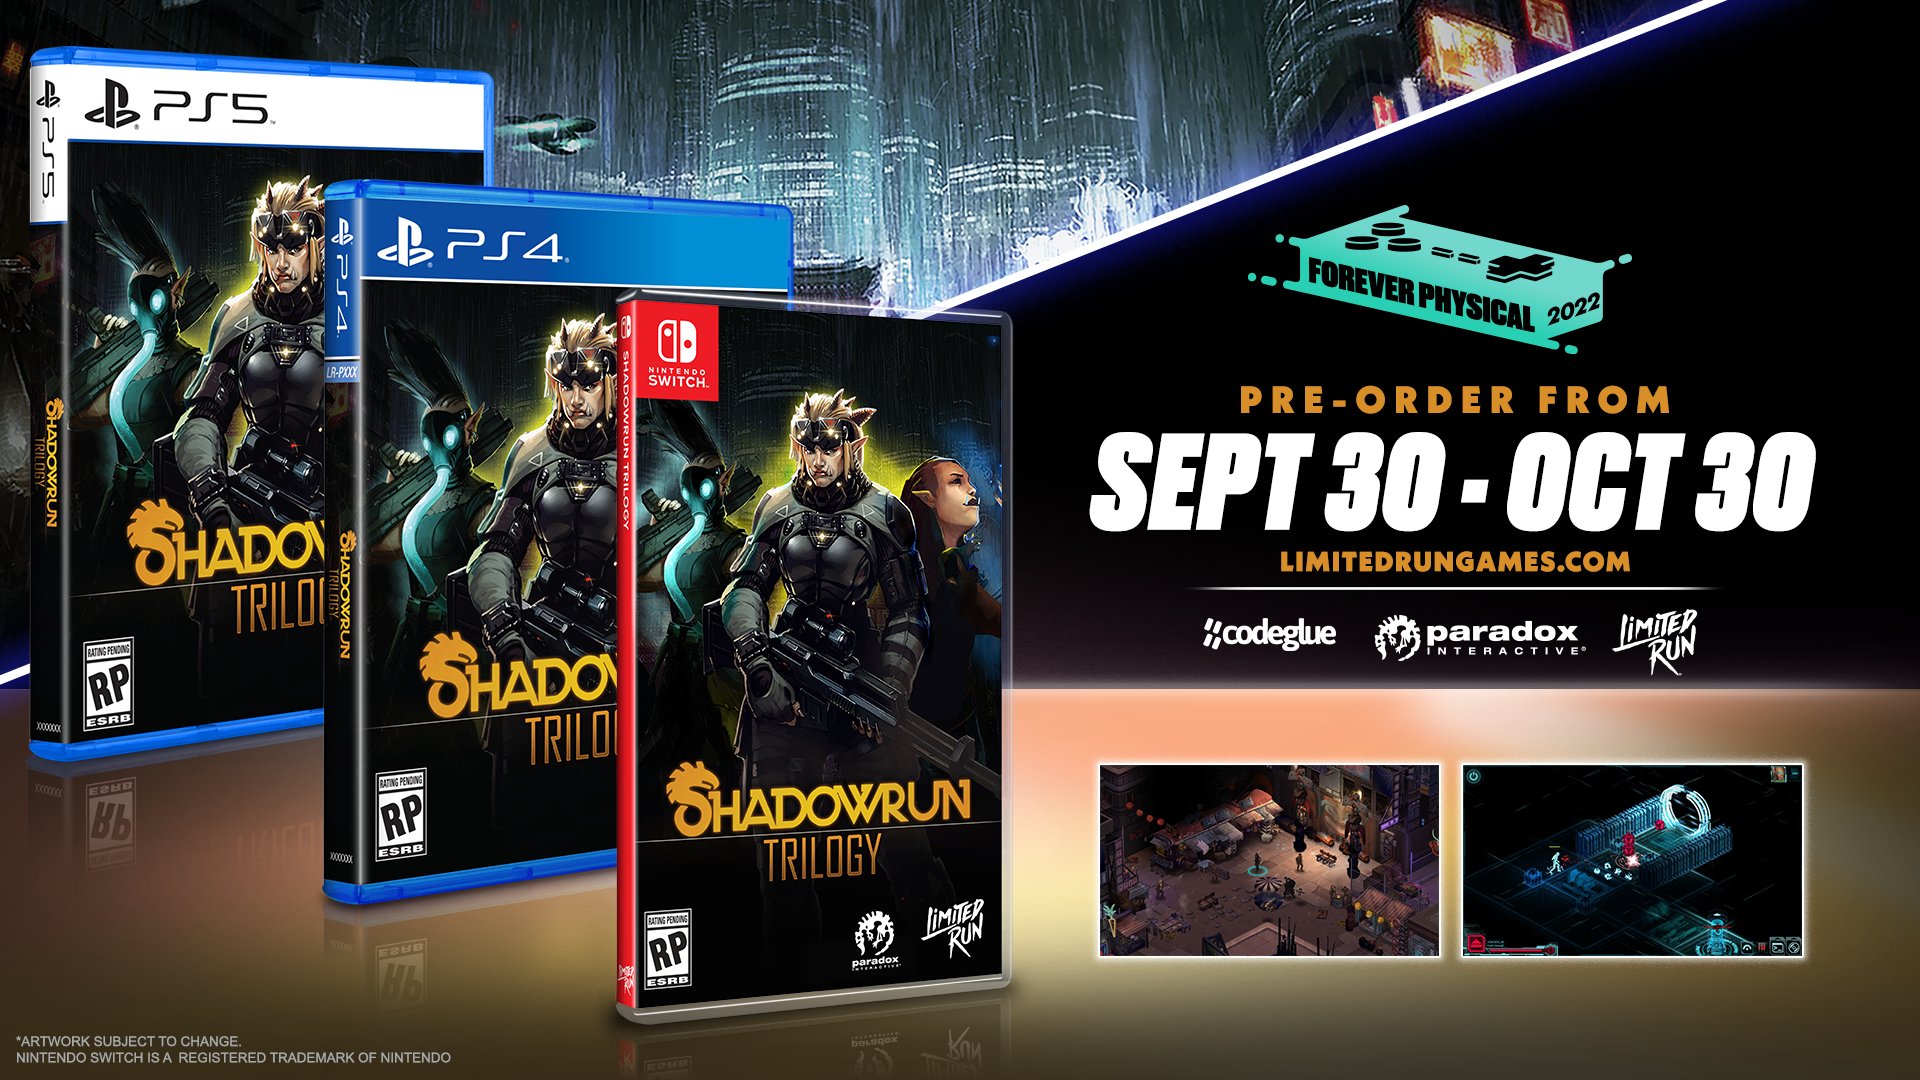 Buy Shadowrun Trilogy